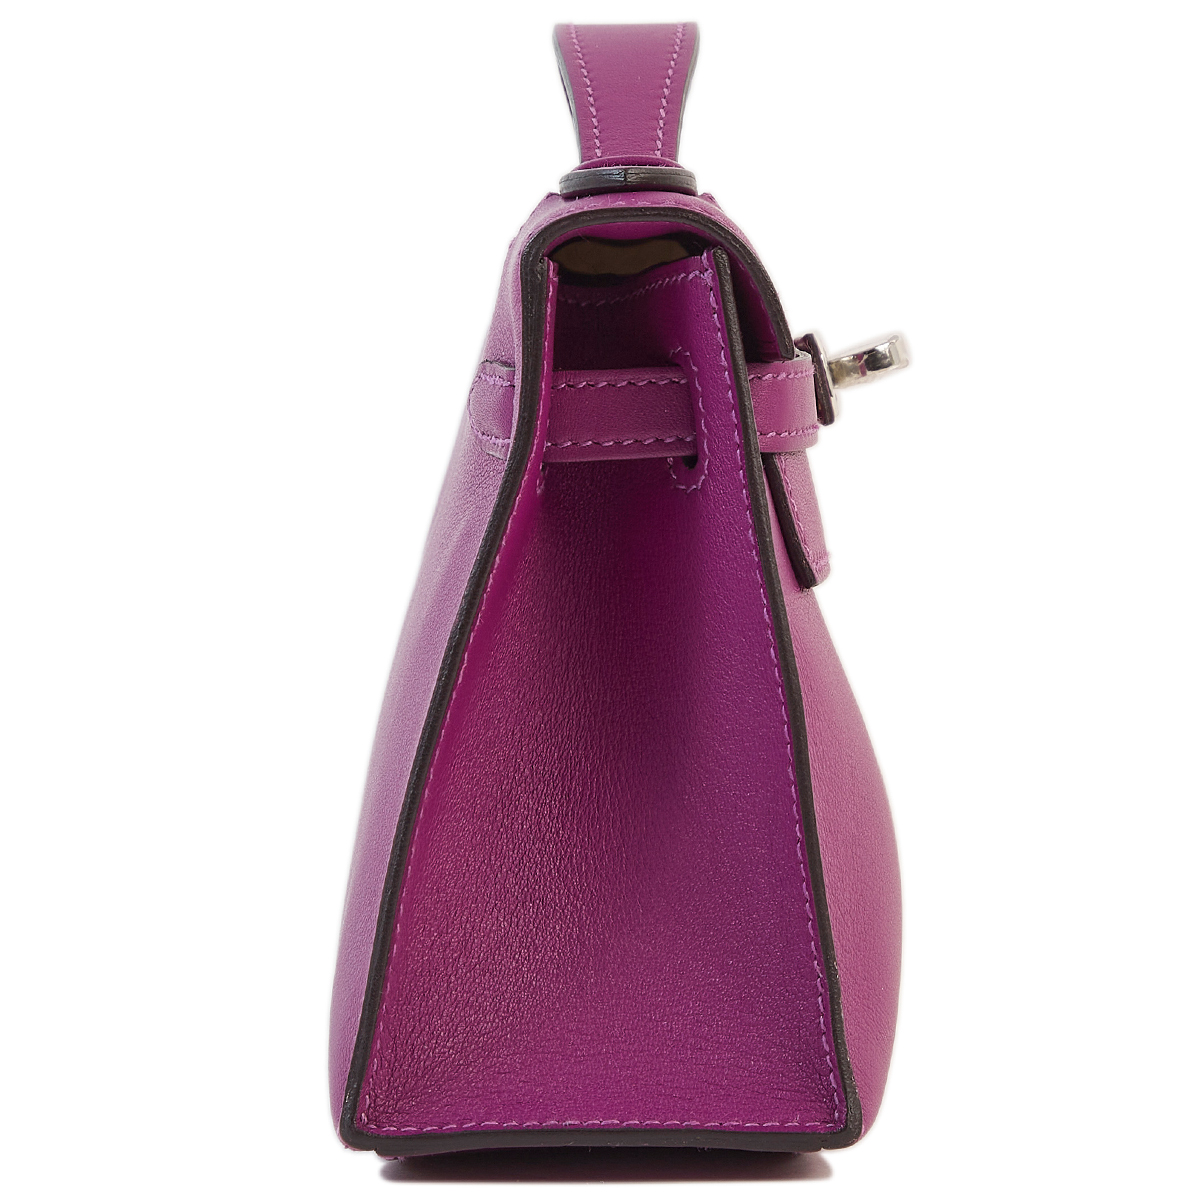 Sold at Auction: Hermes Kelly Handbag Anemone Swift with Palladium Hardware 25  Purple